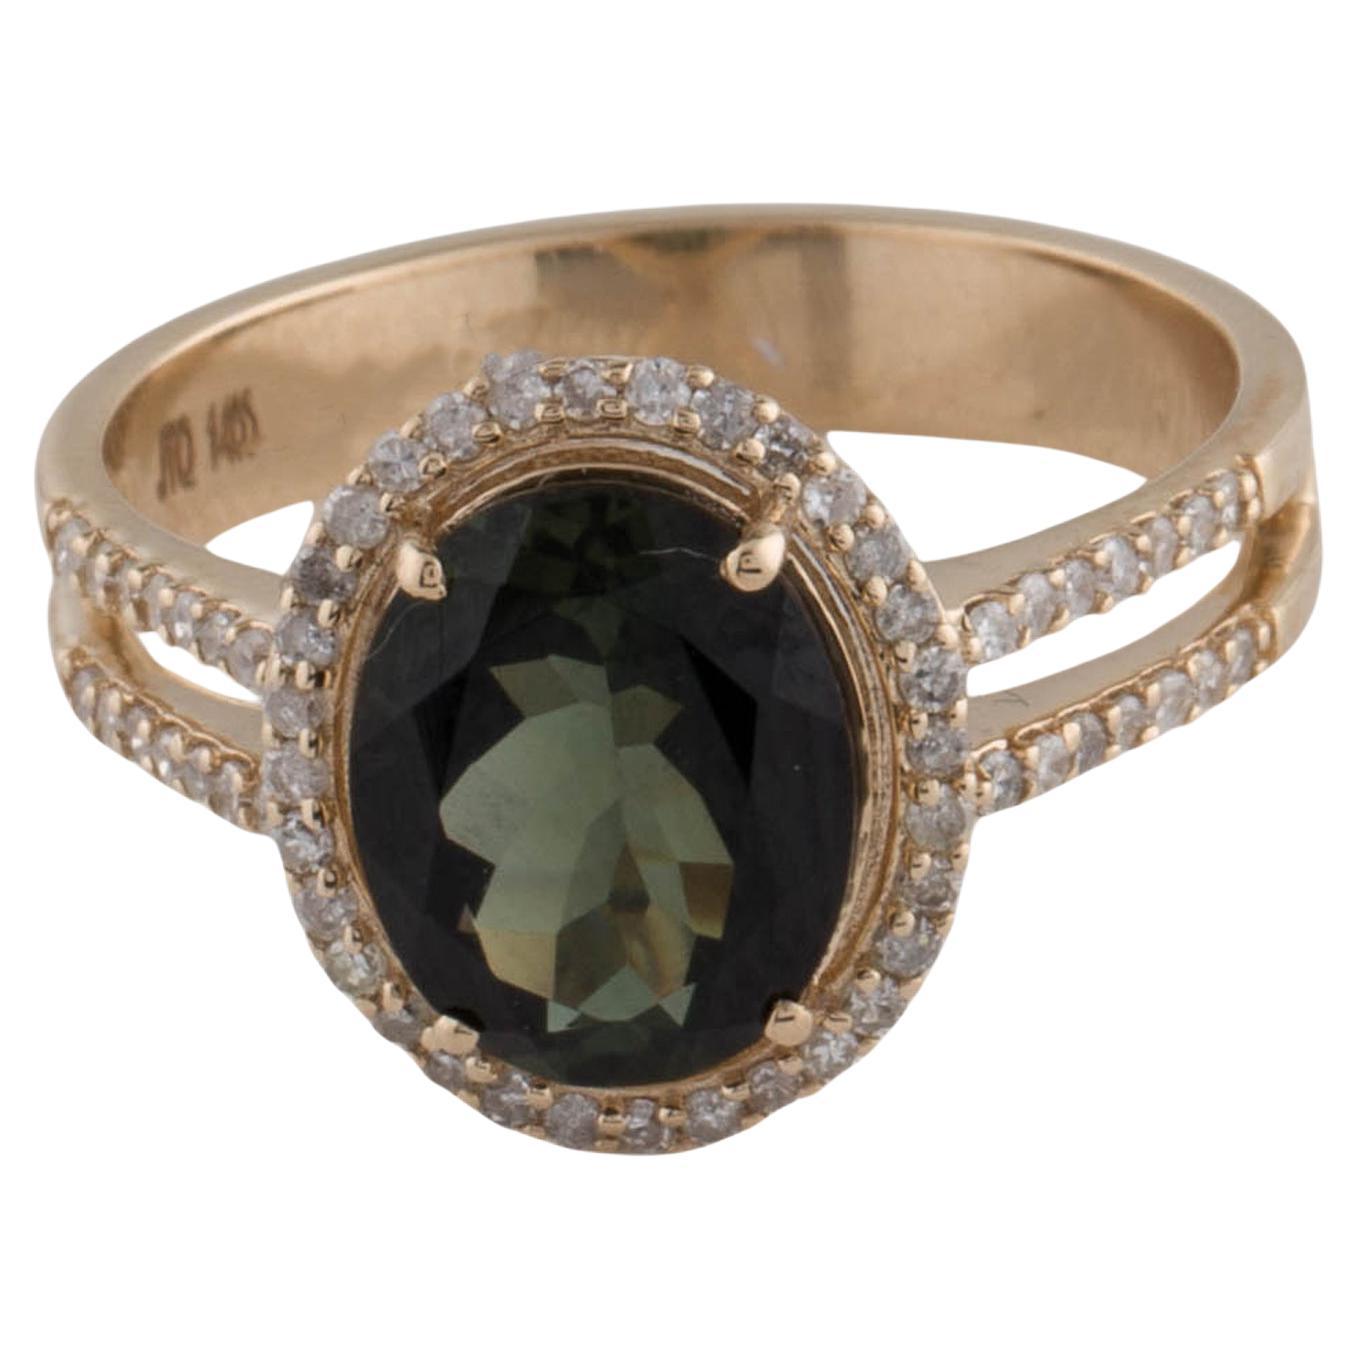 Elegant 14K Gold 2.61ctw Tourmaline & Diamond Cocktail Ring - Size 8 - Jewelry For Sale